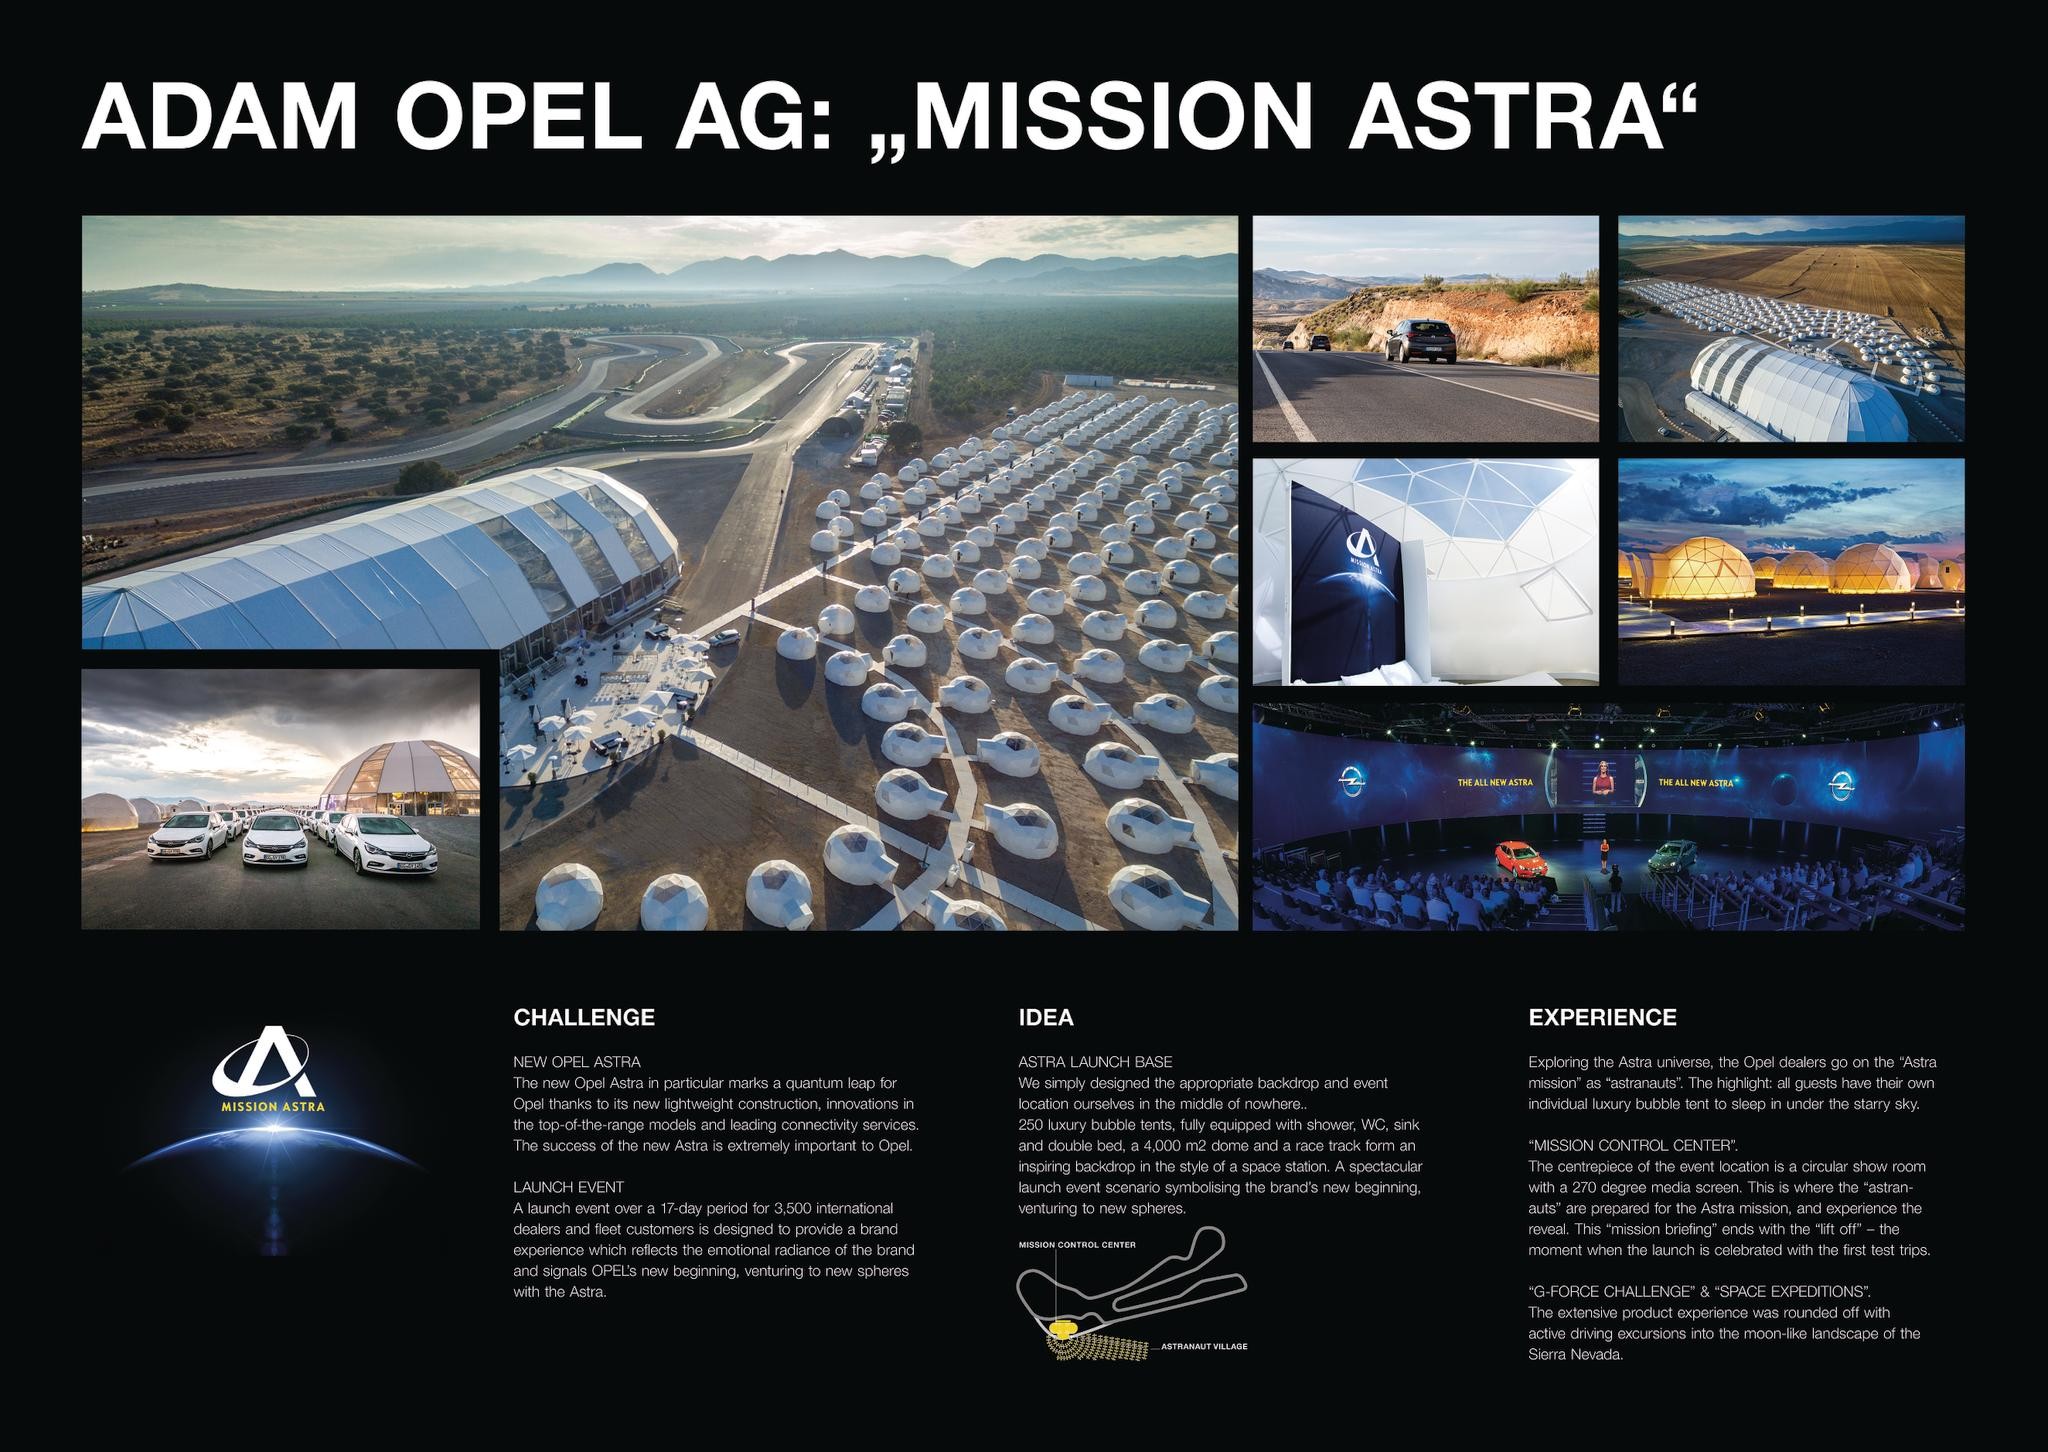 Mission Astra